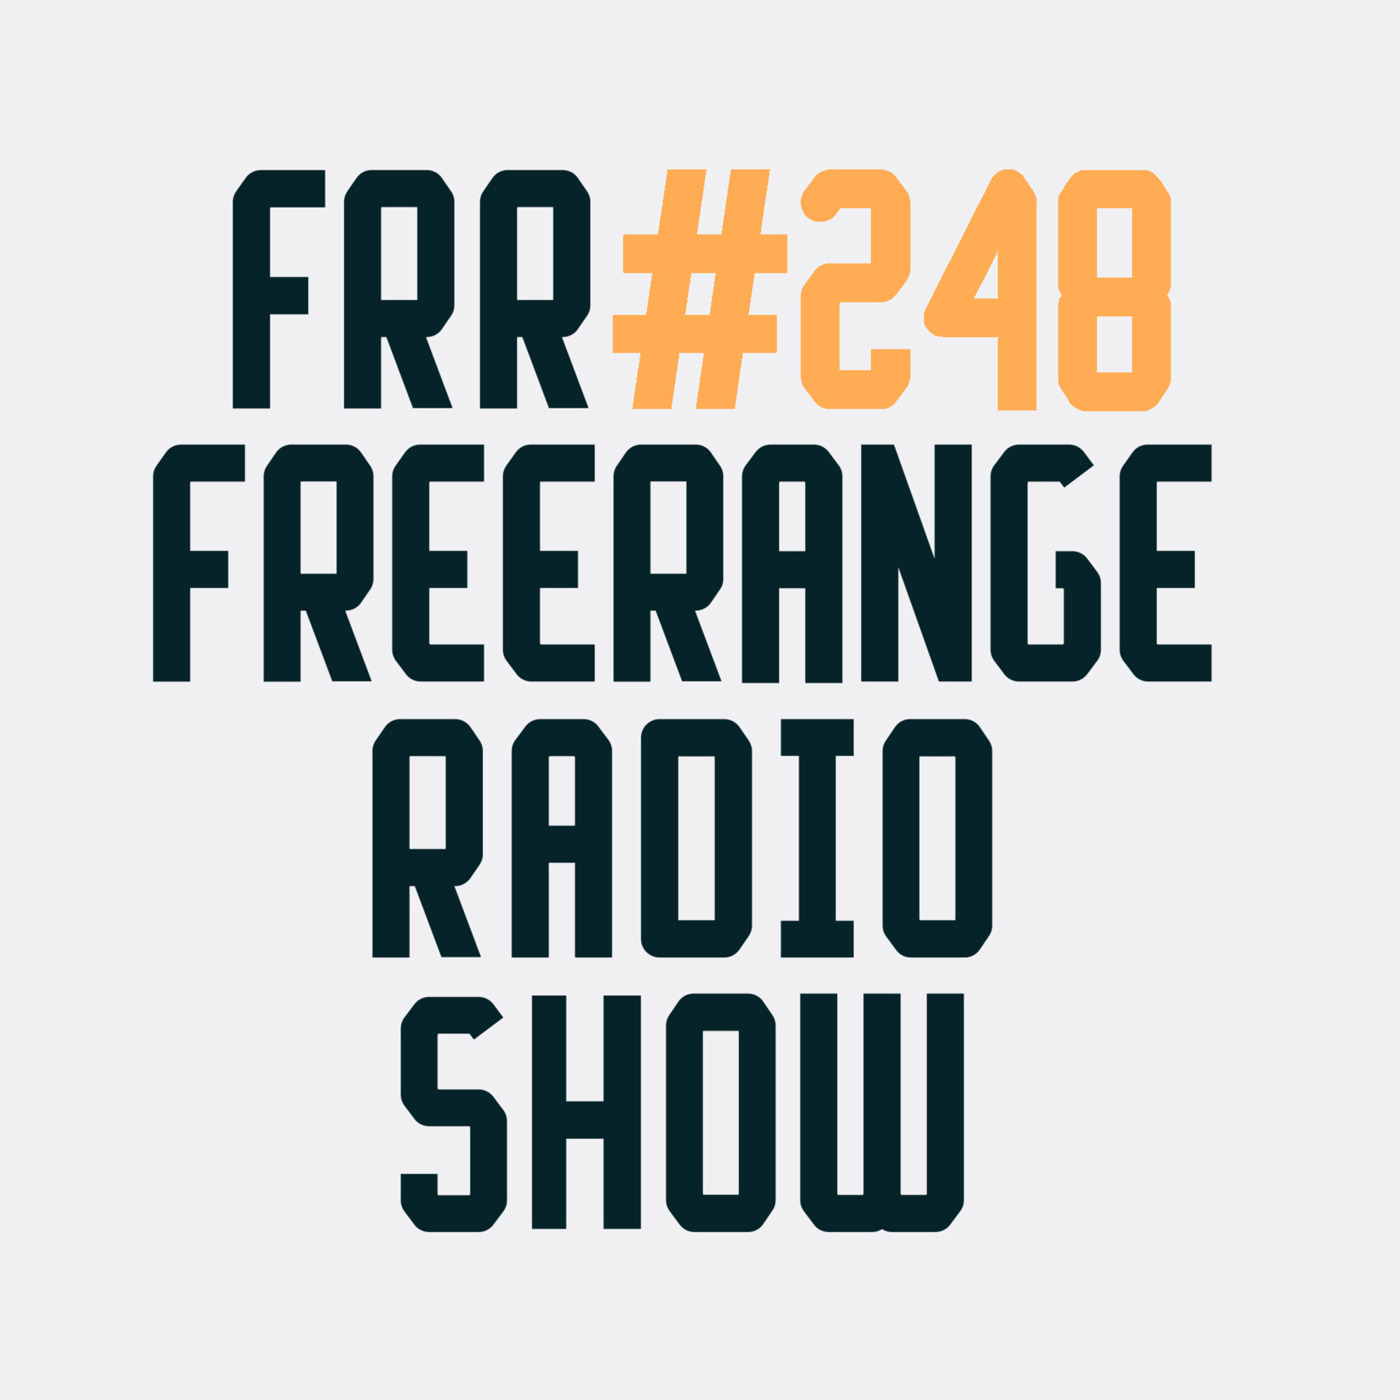 Episode 248: Freerange Records Radioshow No.248 - April 2022 With Matt Masters